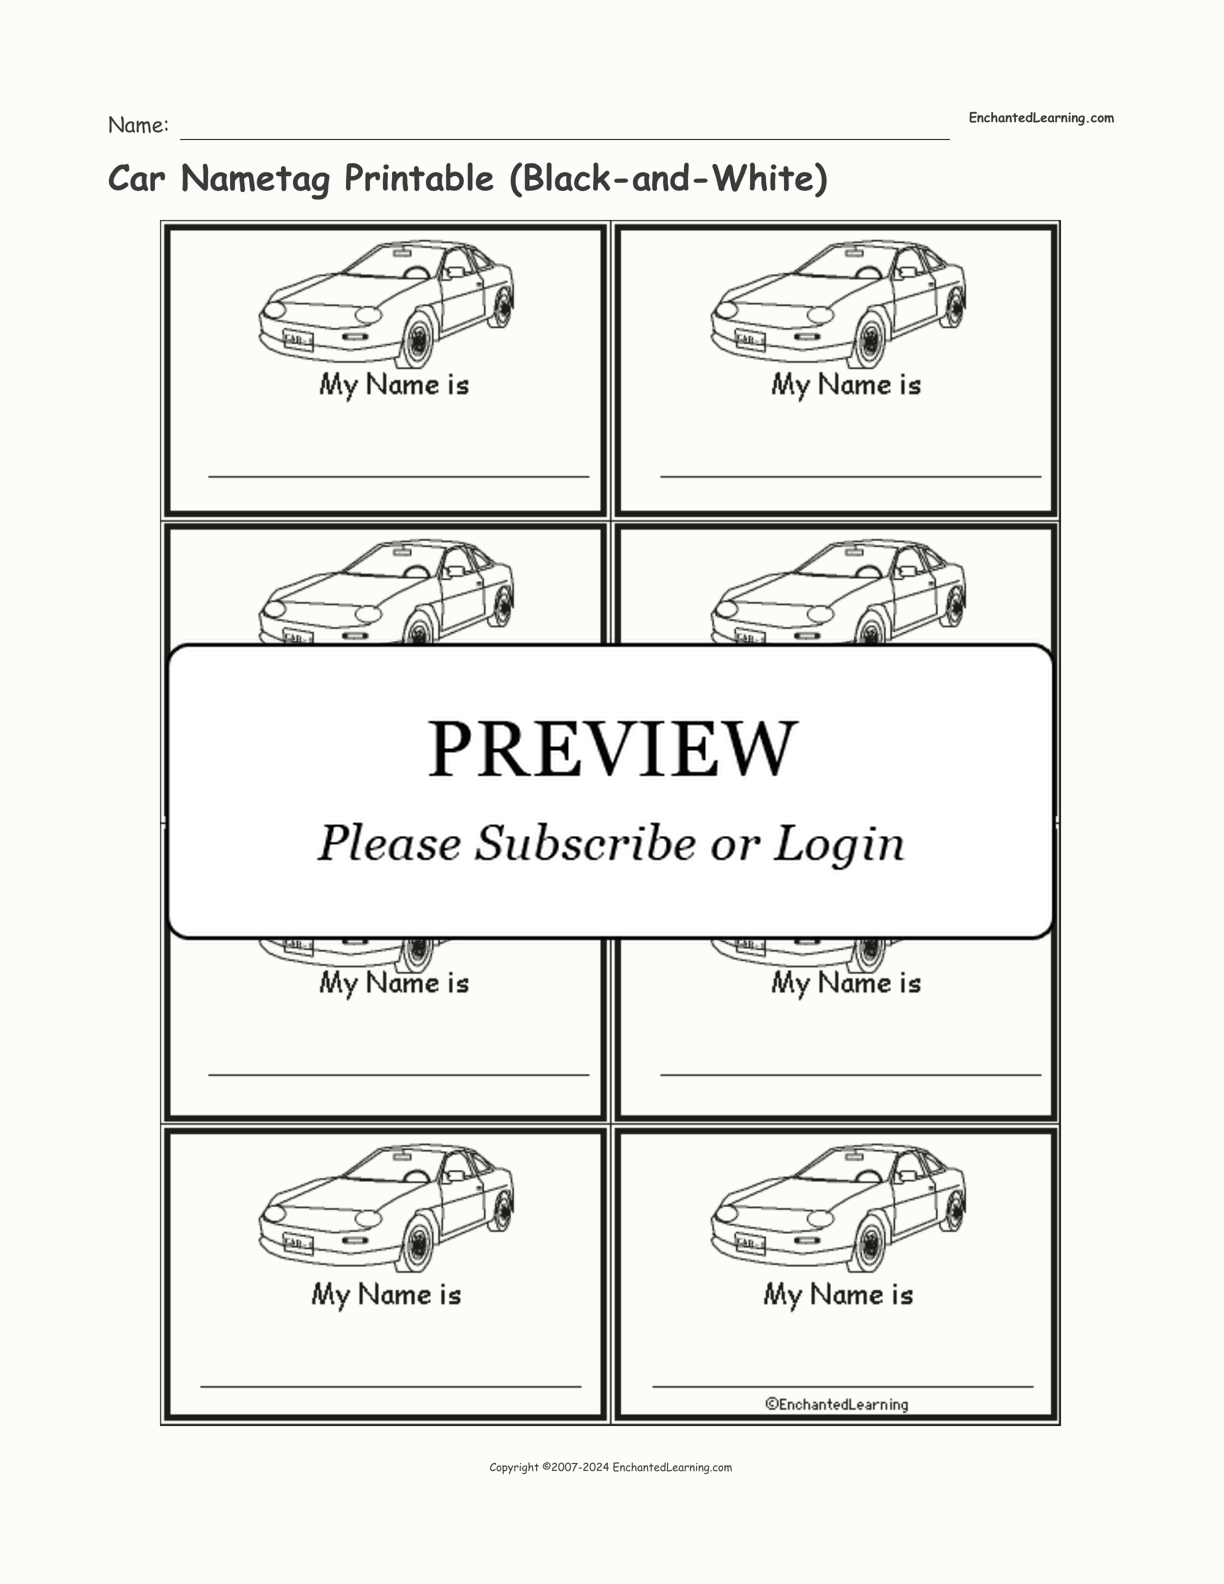 Car Nametag Printable (Black-and-White) interactive printout page 1